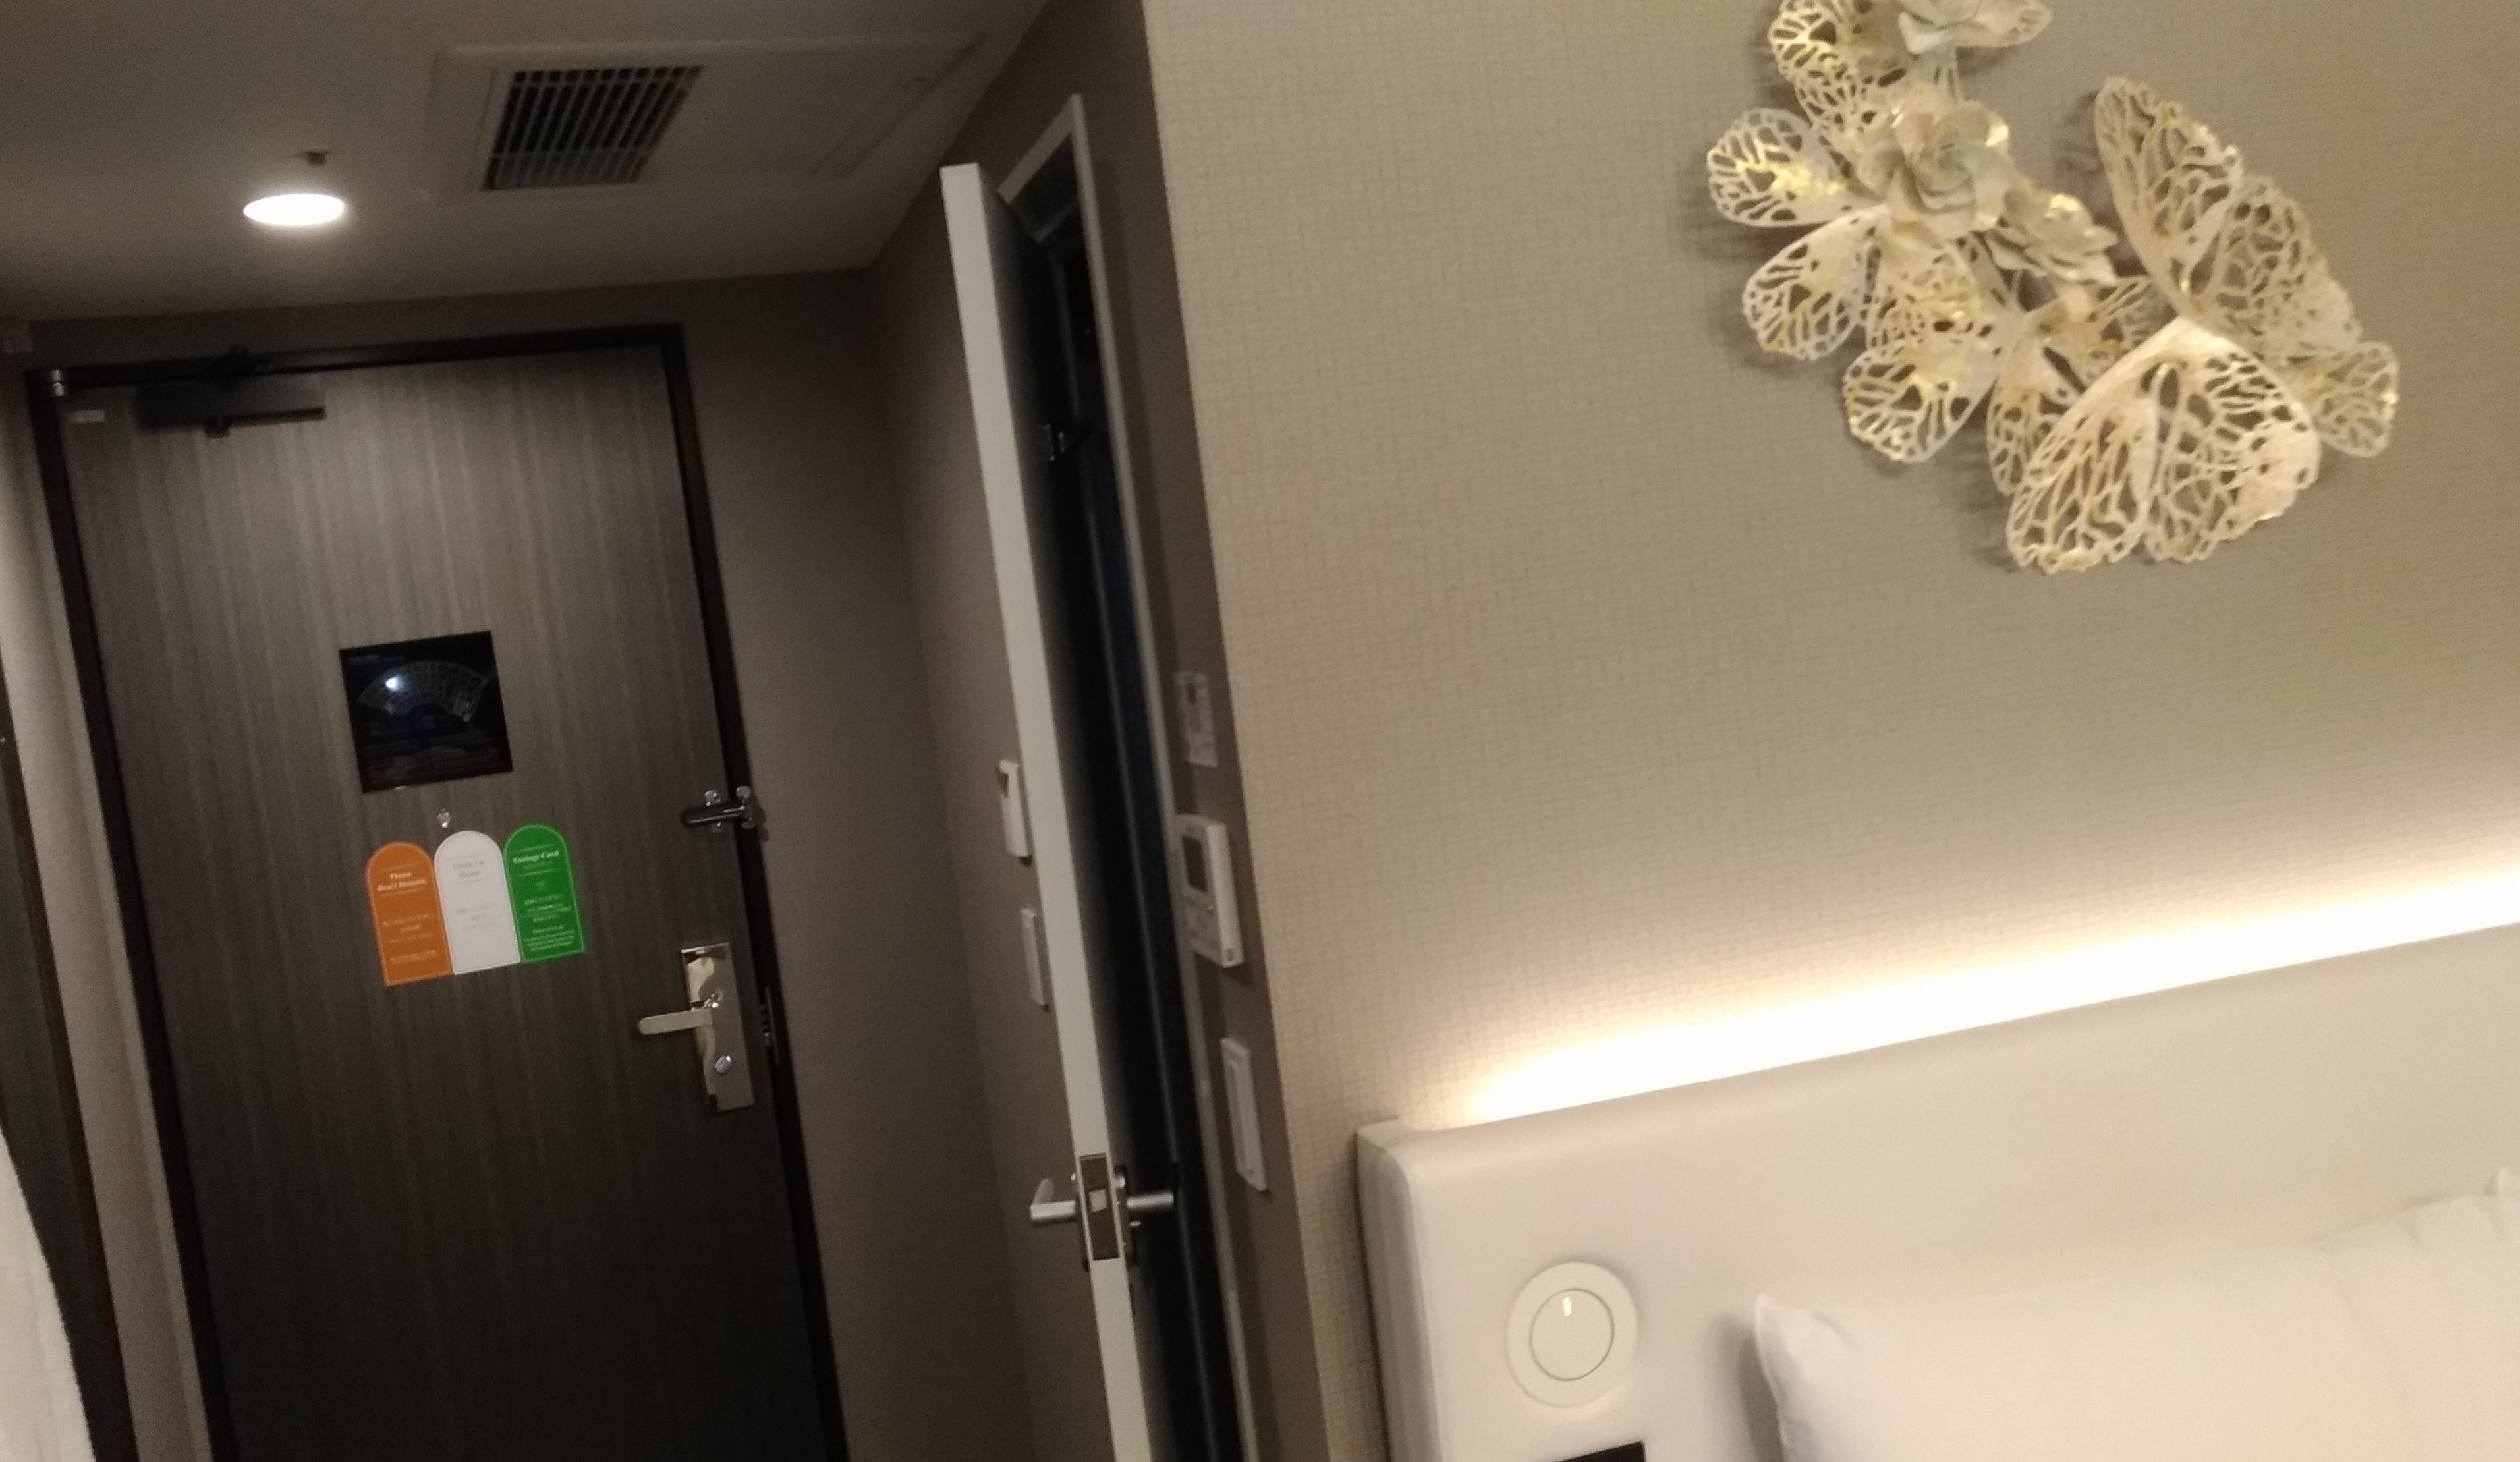 osaka_cabin_hotel_room_reviews_202010_2.jpg